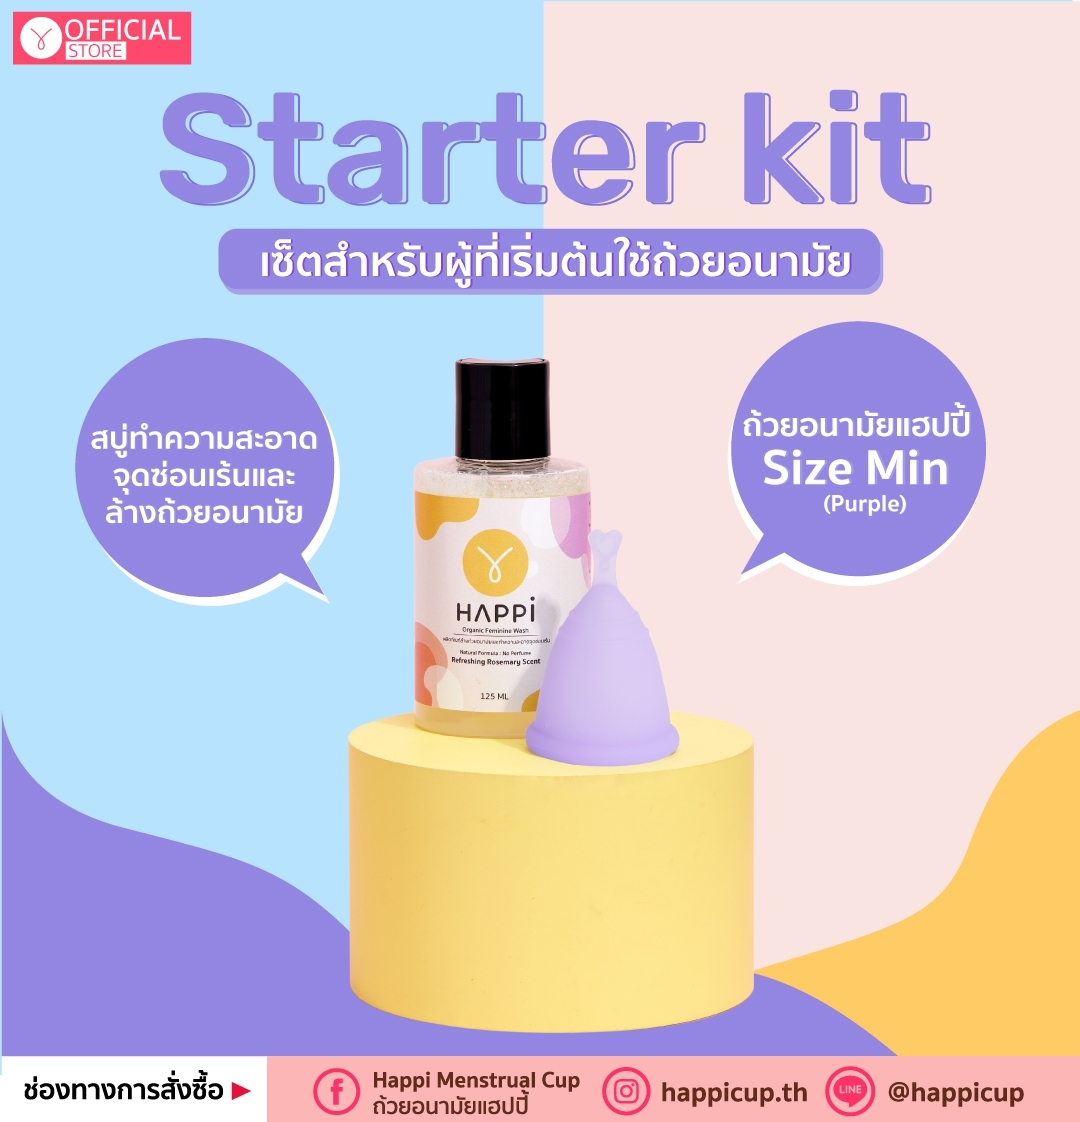 Starter Kit Min (Purple Limited)